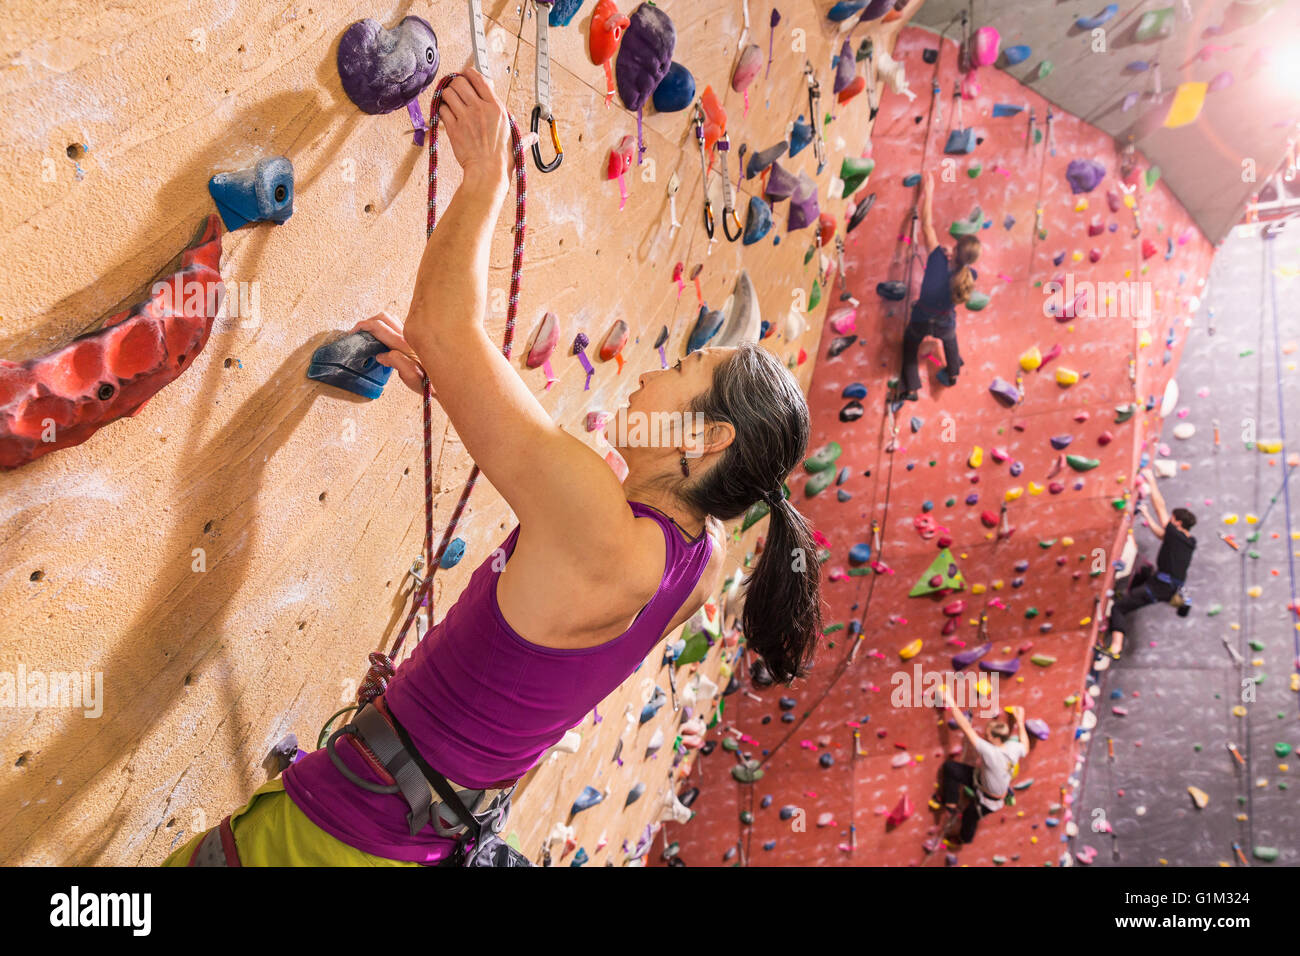 Climbers scaling rock wall Stock Photo